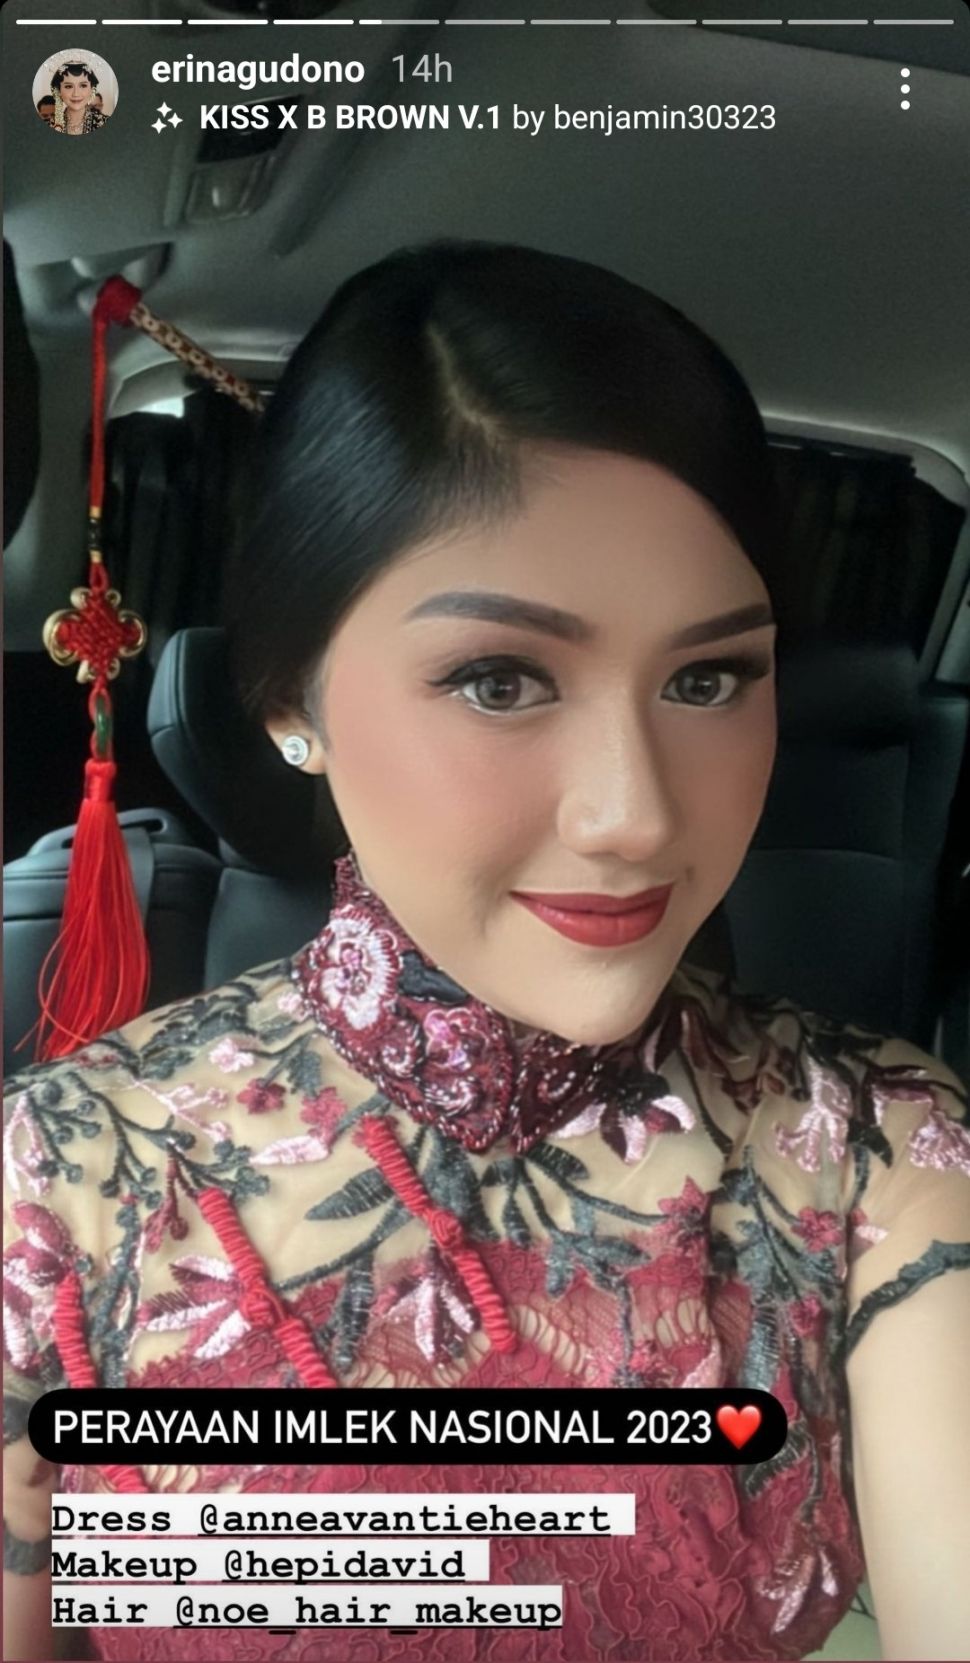 Penampilan Kaesang Pangarep dan Erina Gudono di Perayaan Imlek Nasional 2023 (Instagram @erinagudono)